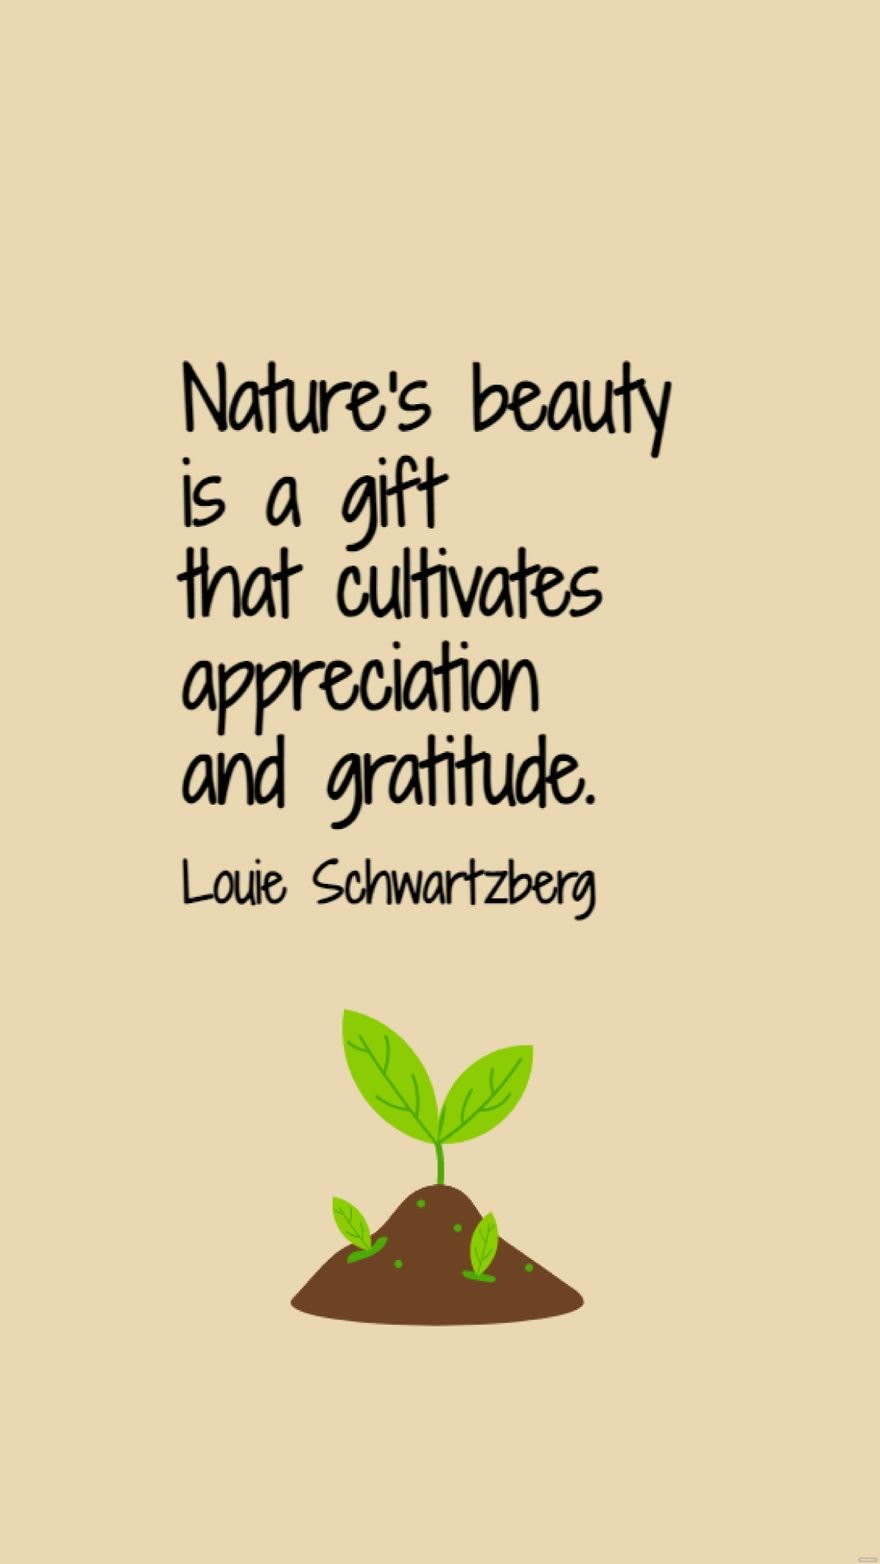 Nature Beauty Font